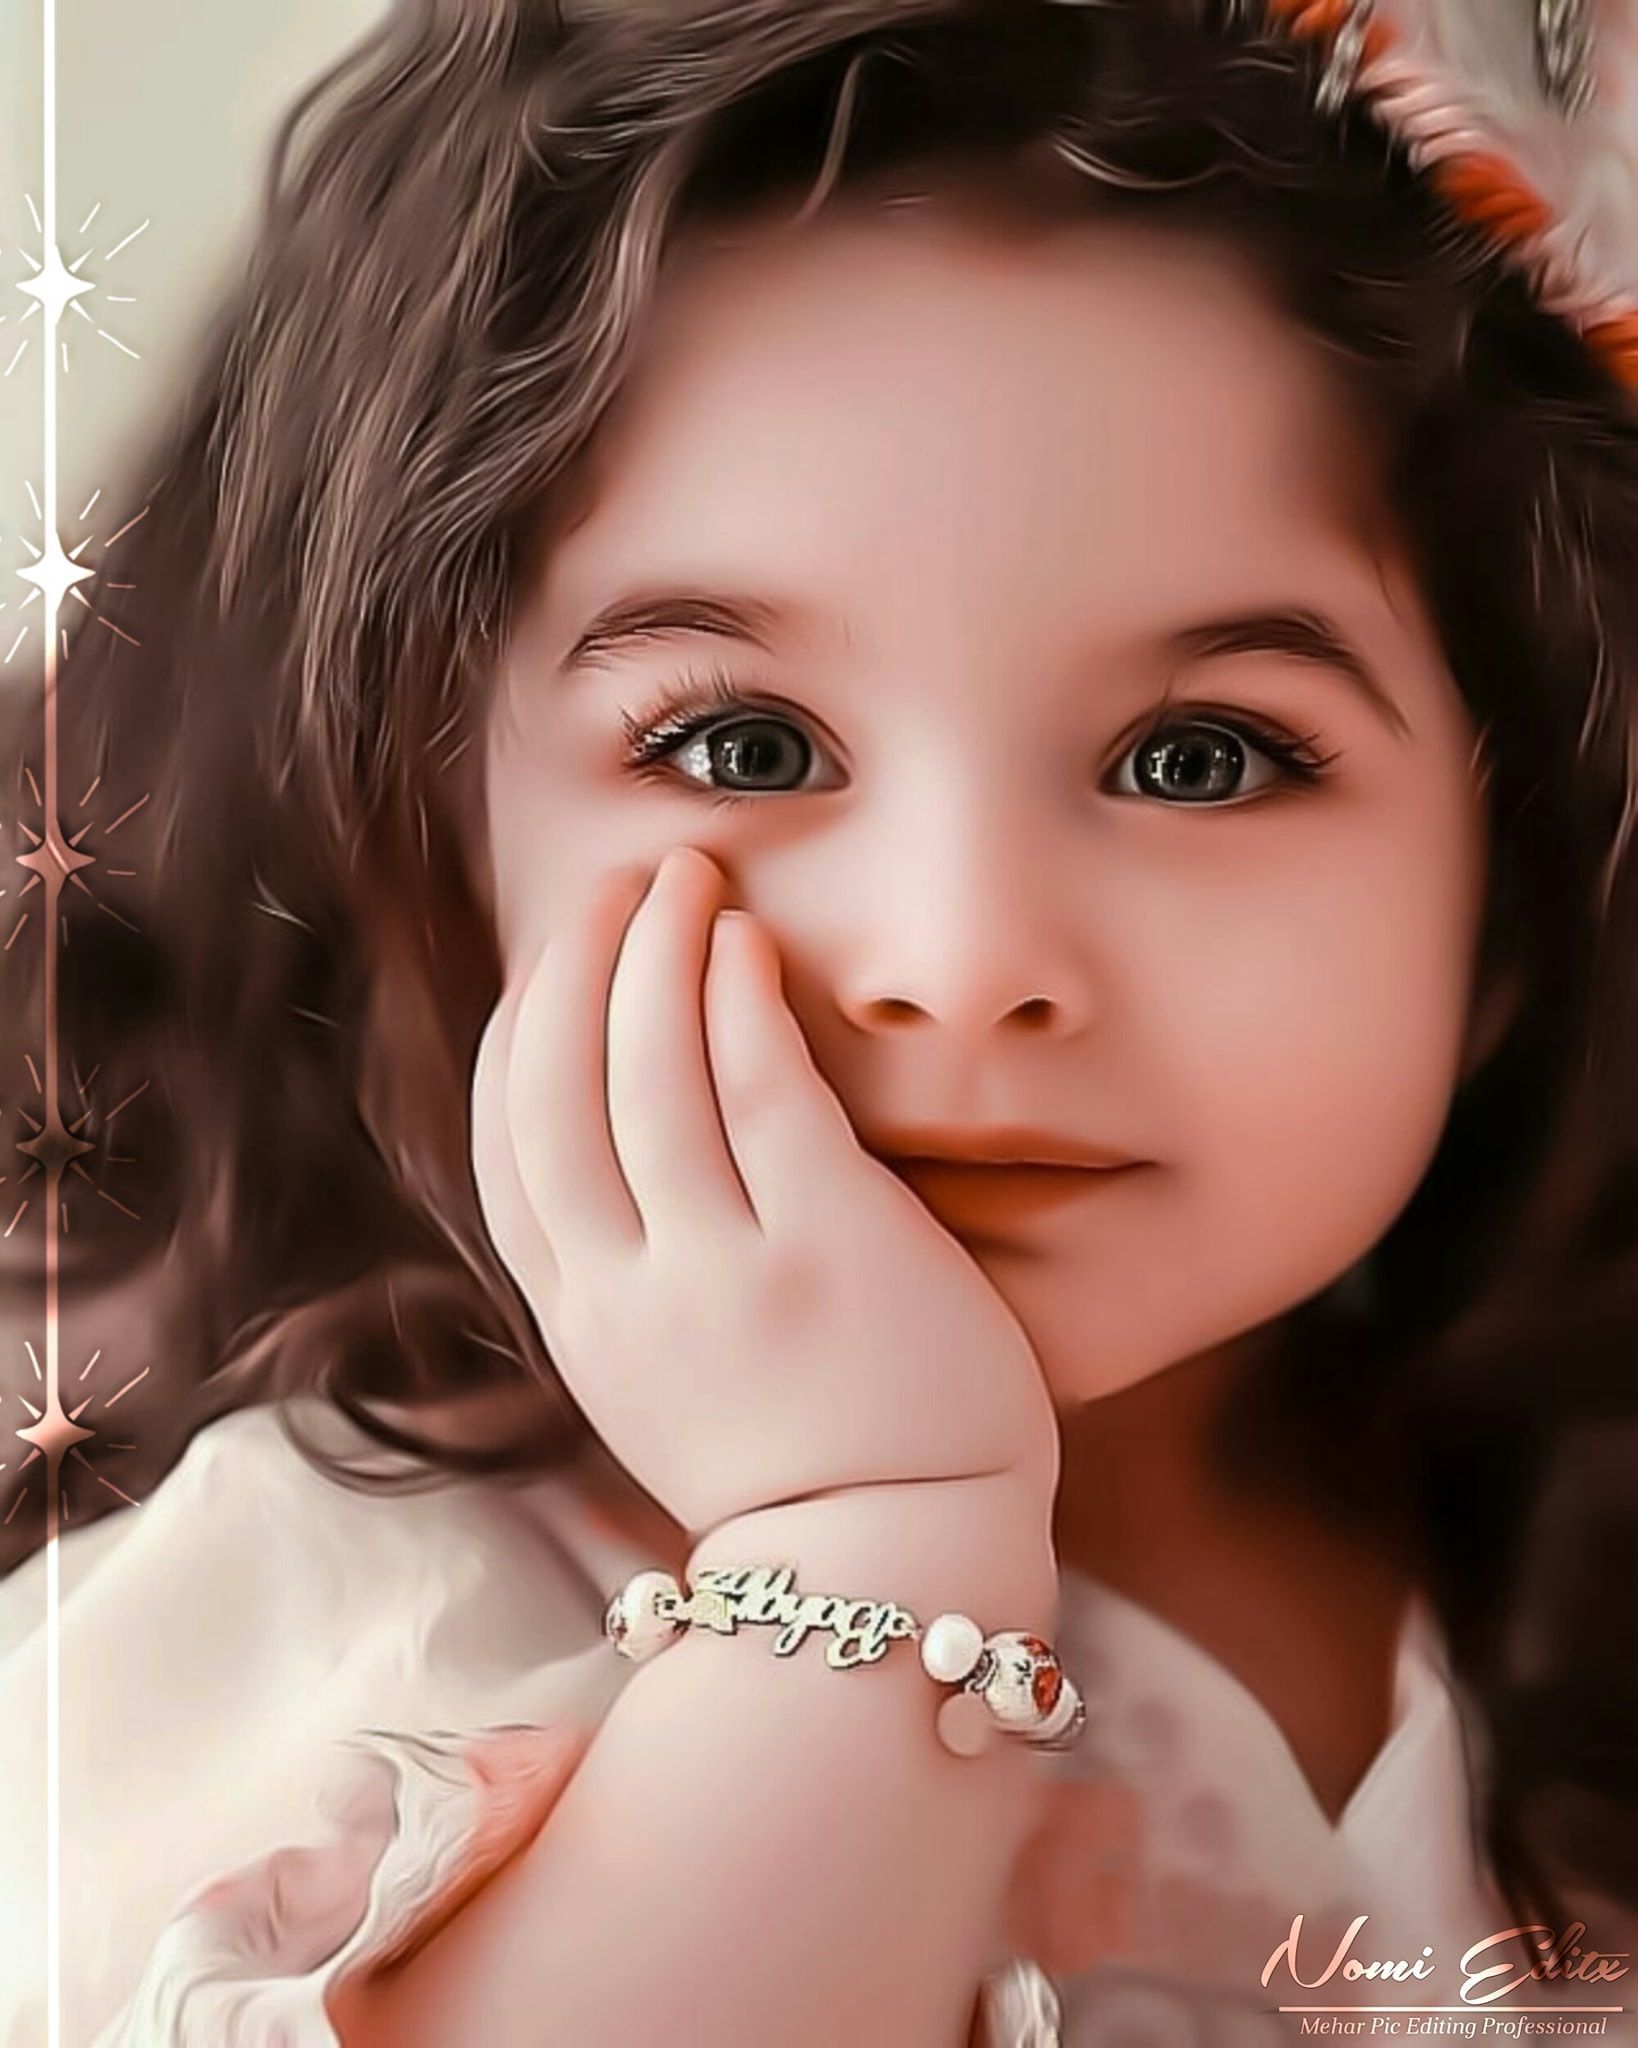 cute baby HD wallpaper, sweet baby photo wallpaper. Baby girl image, Cute baby girl image, Cute little baby girl